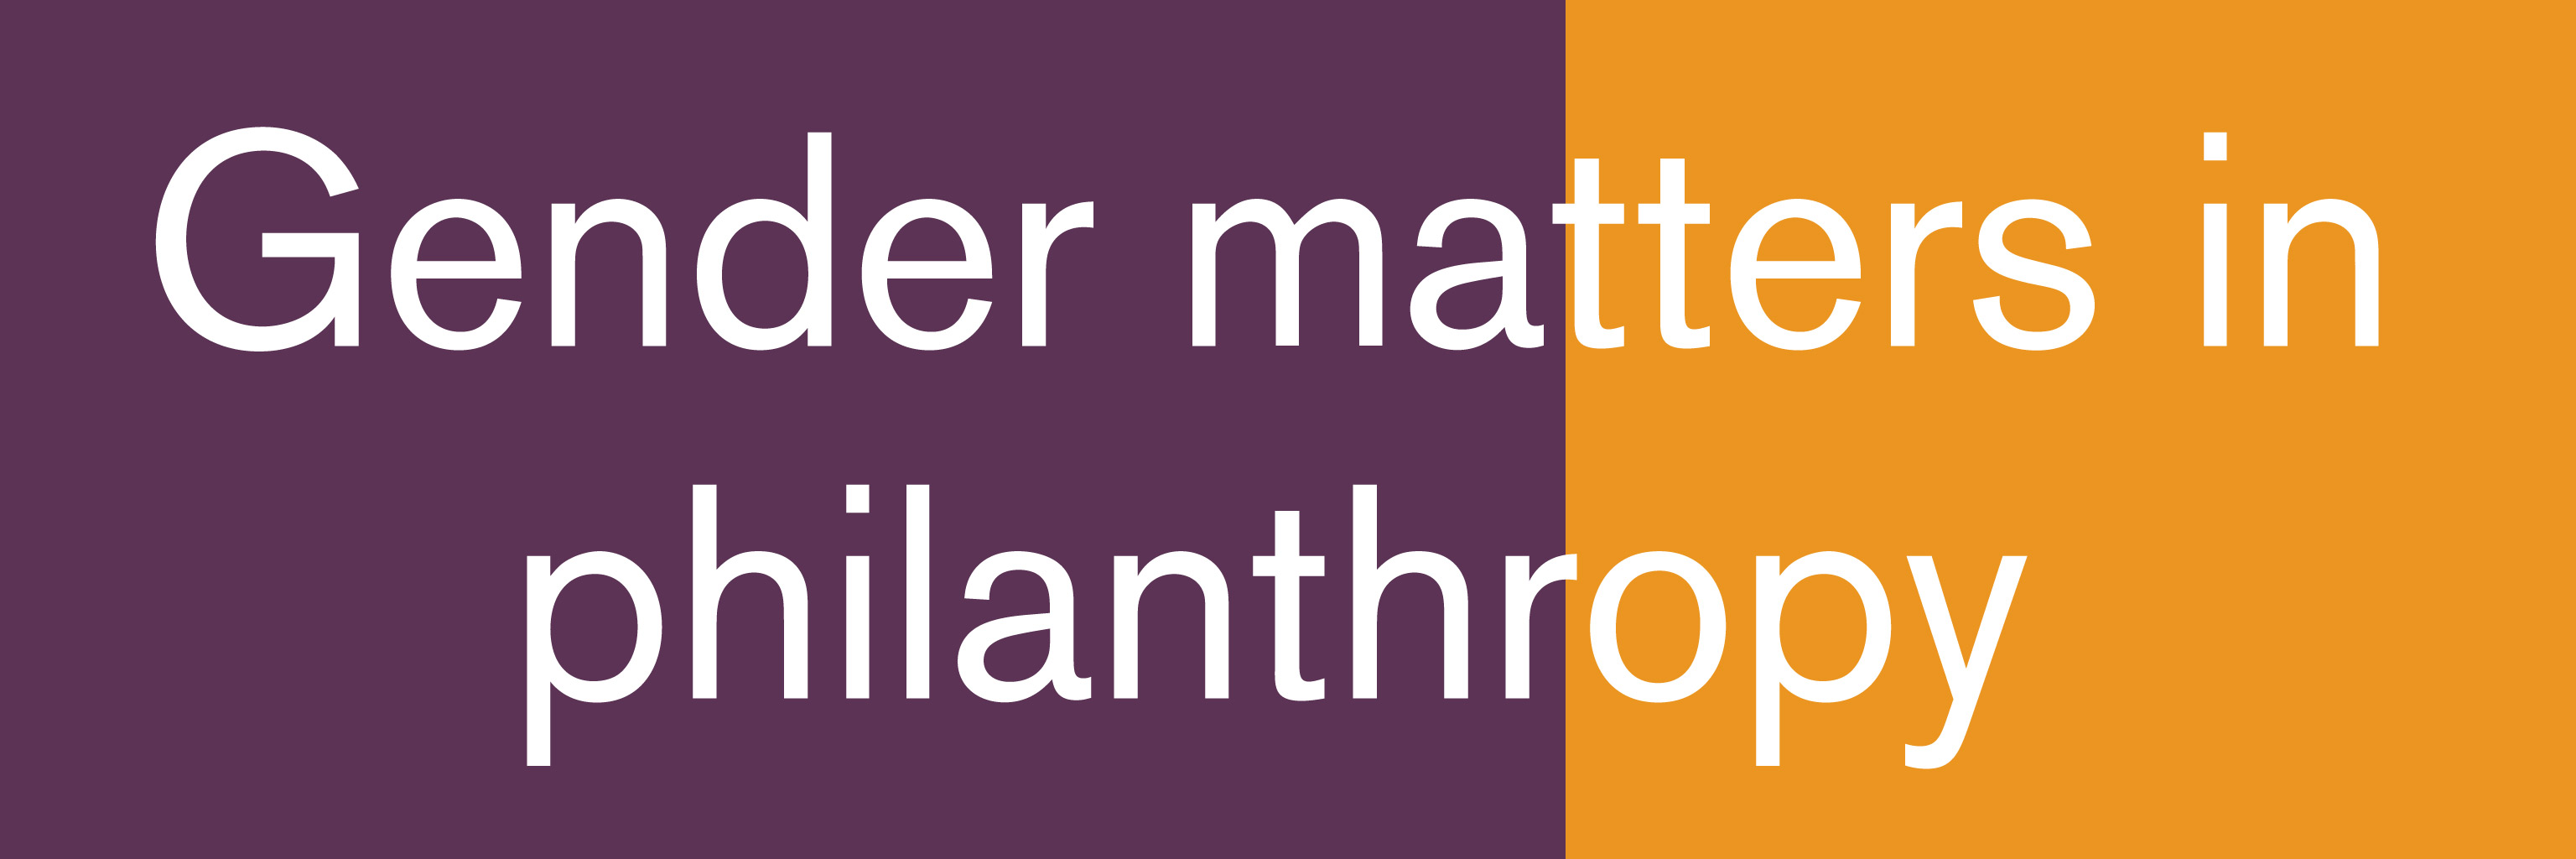 Gender matters in philanthropy